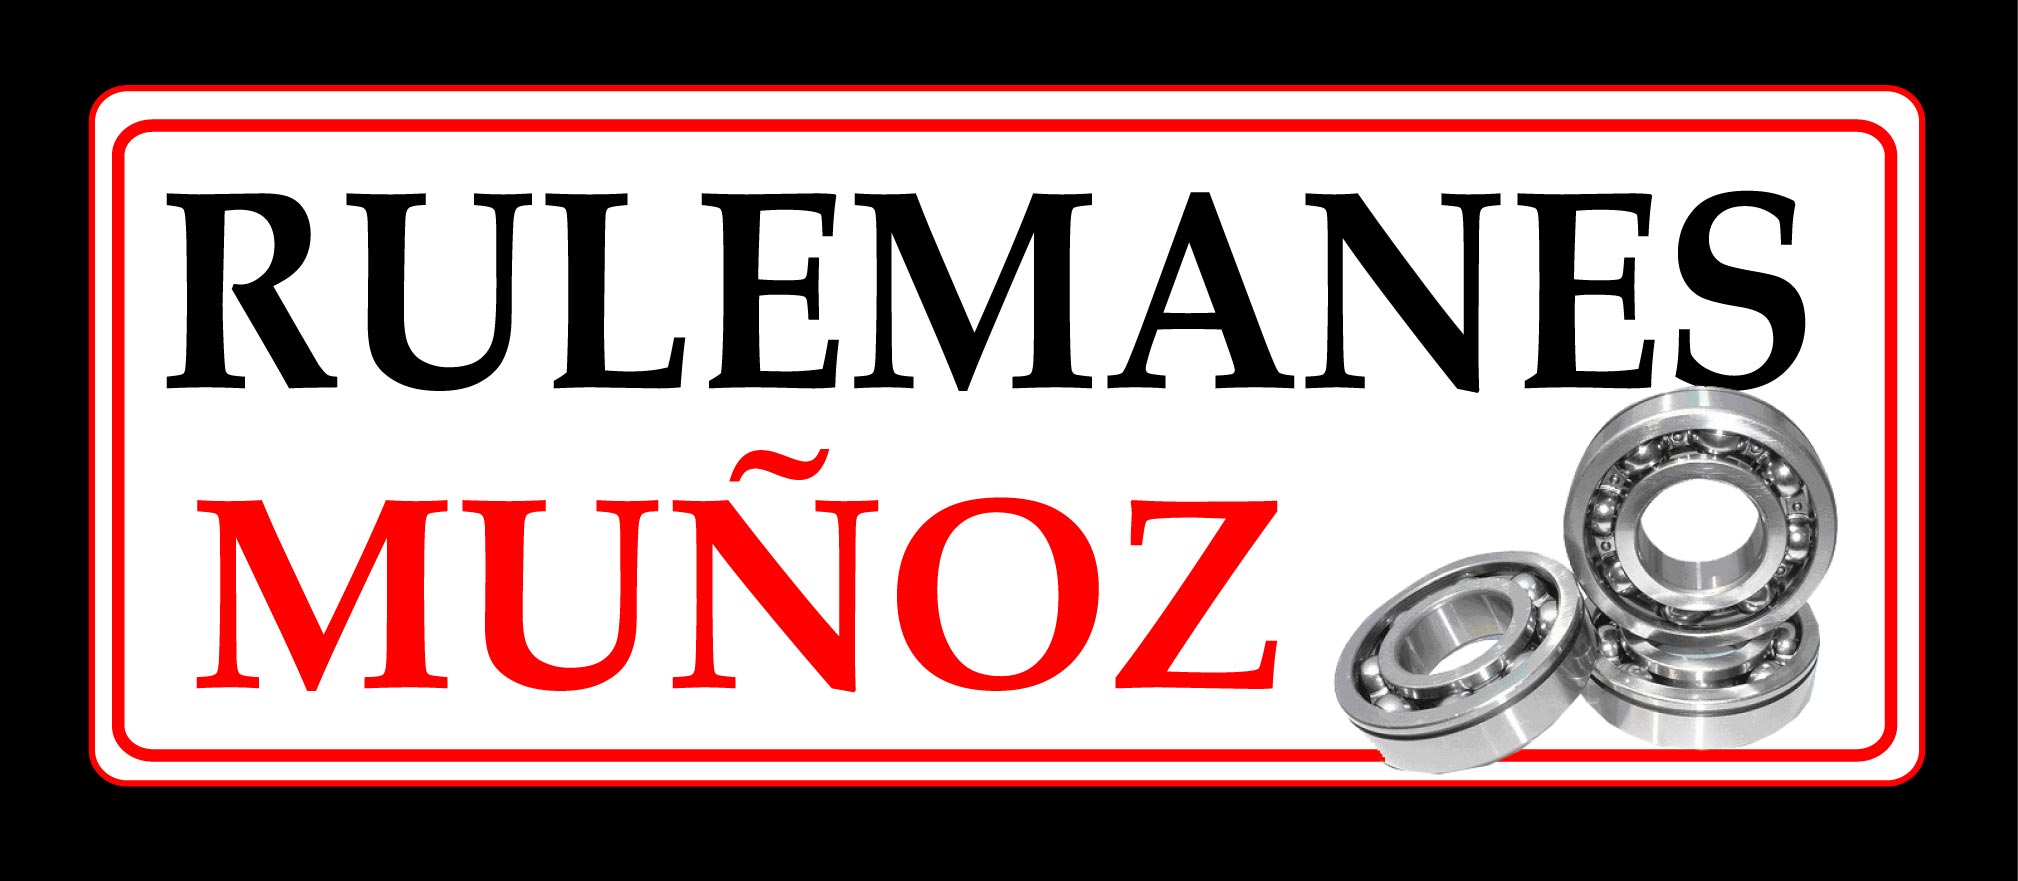 Rulemanes Muñoz